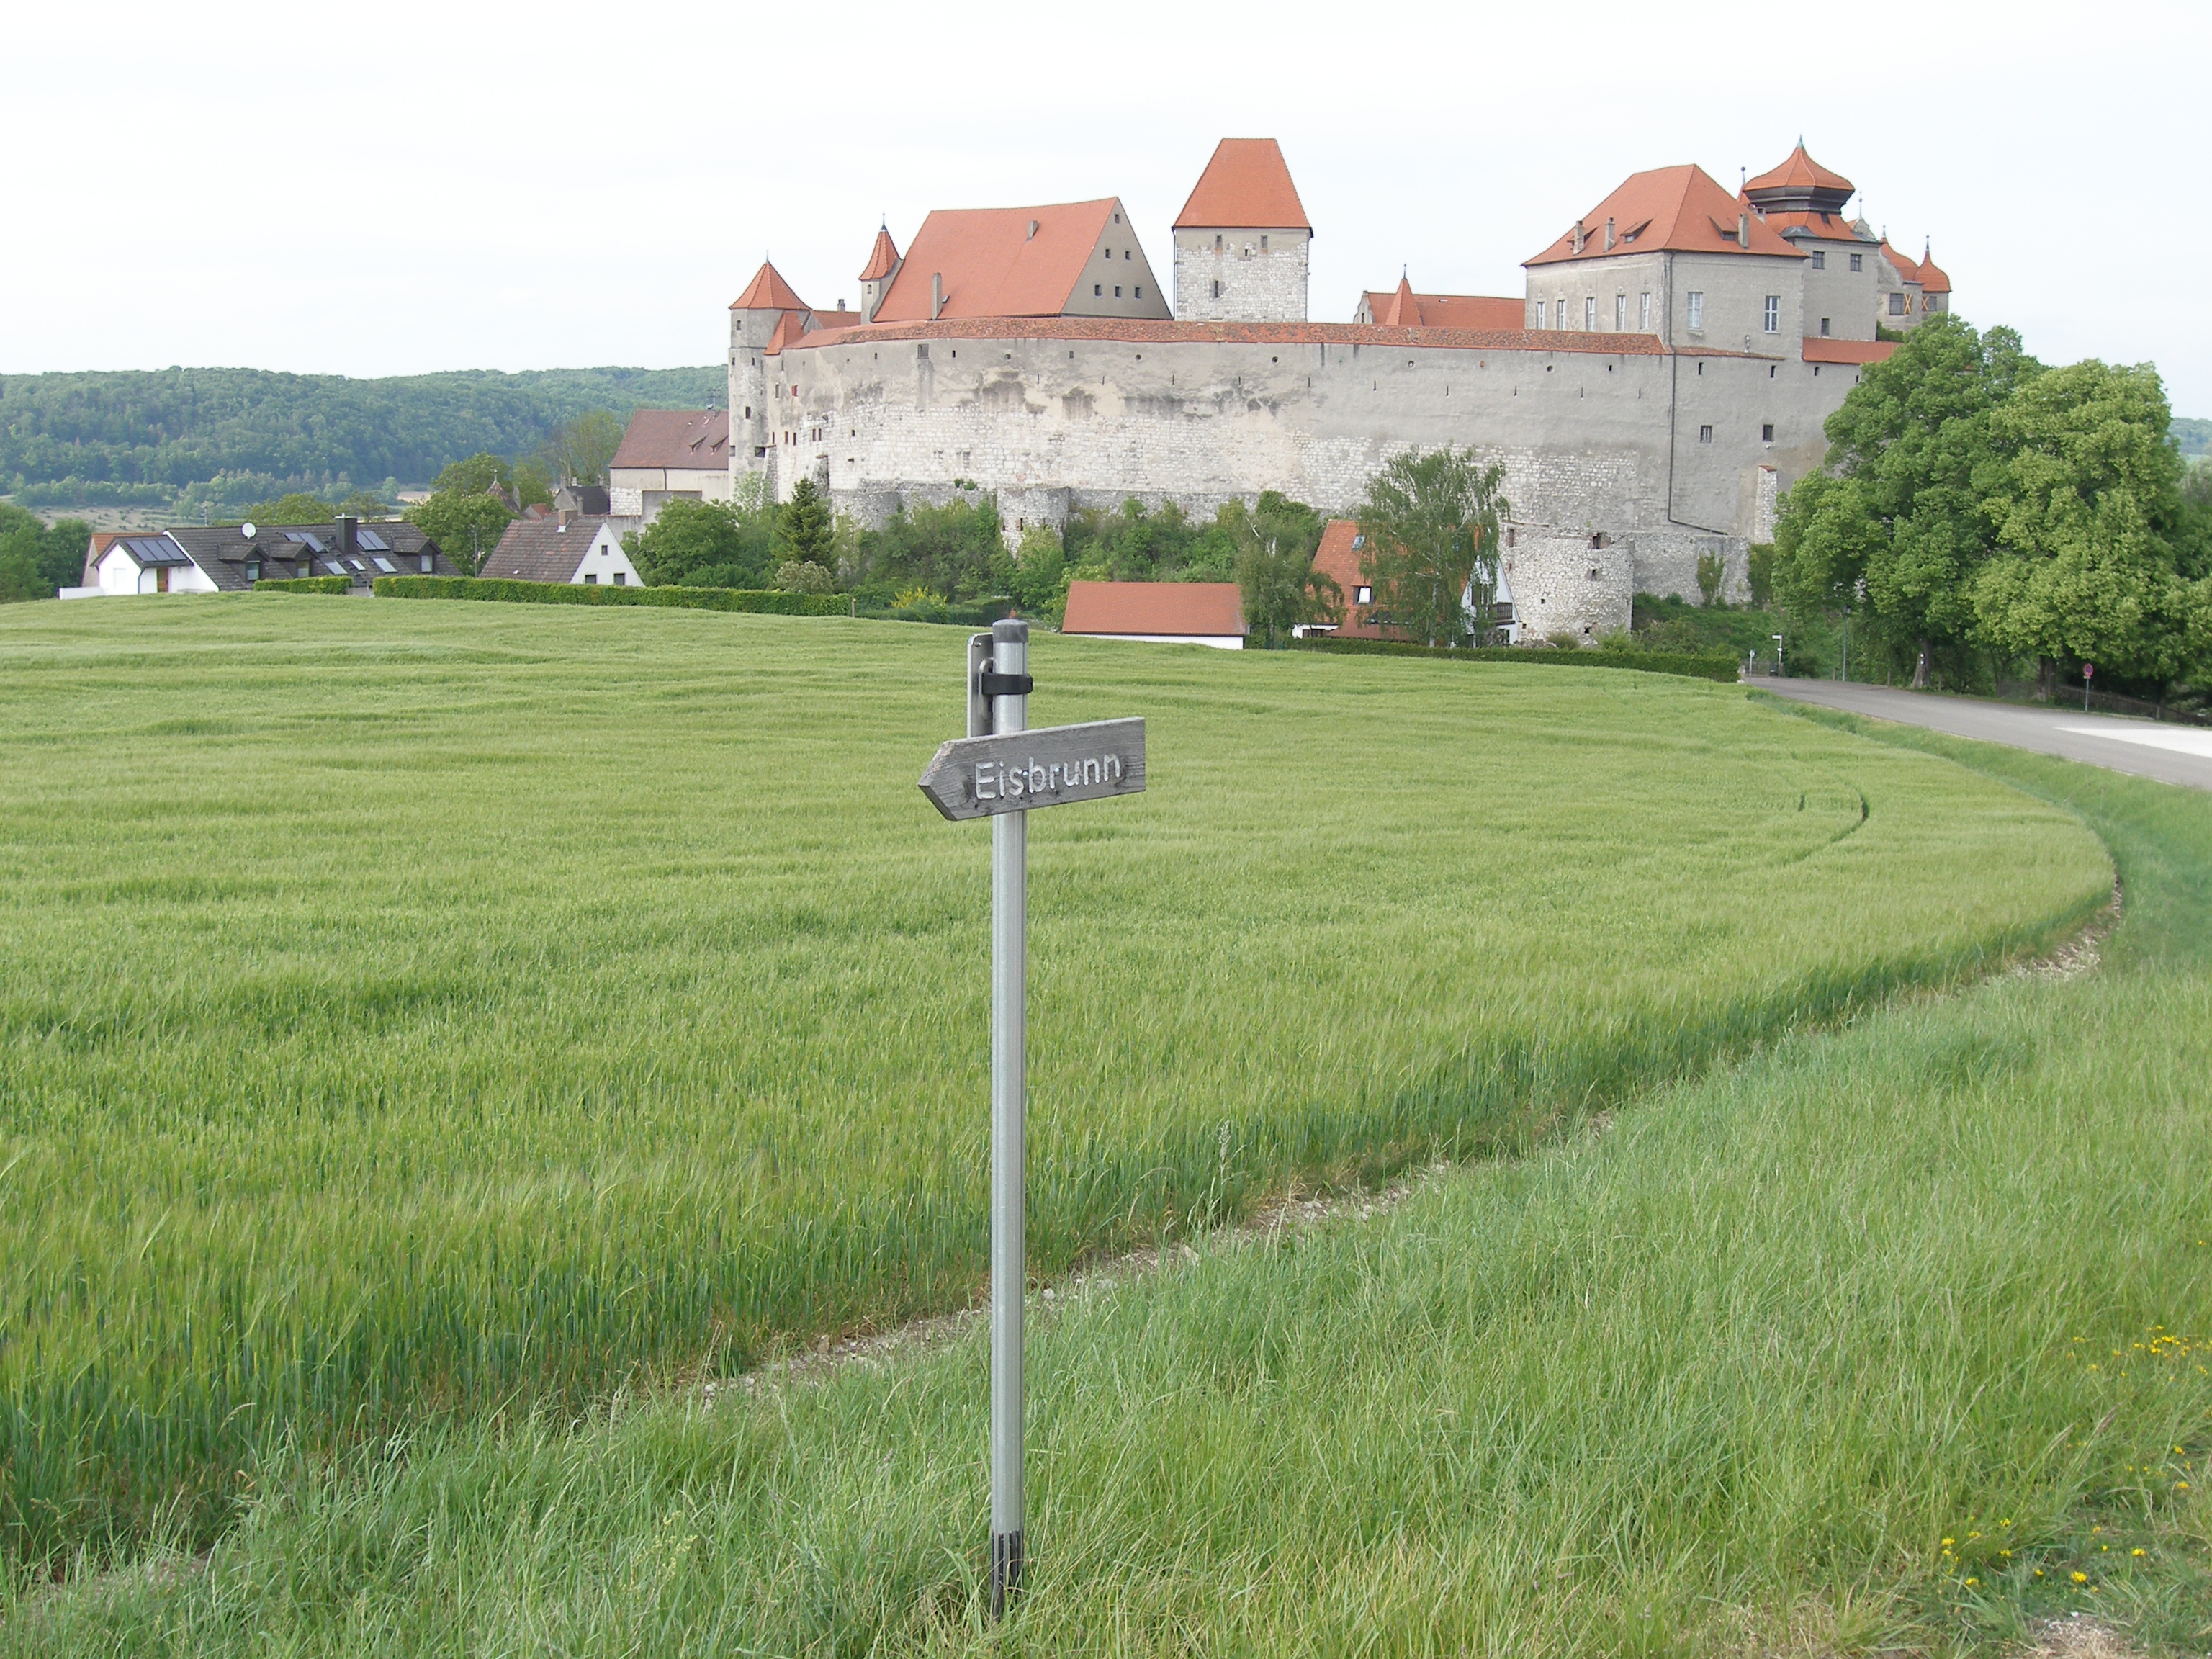 Burg Harburg